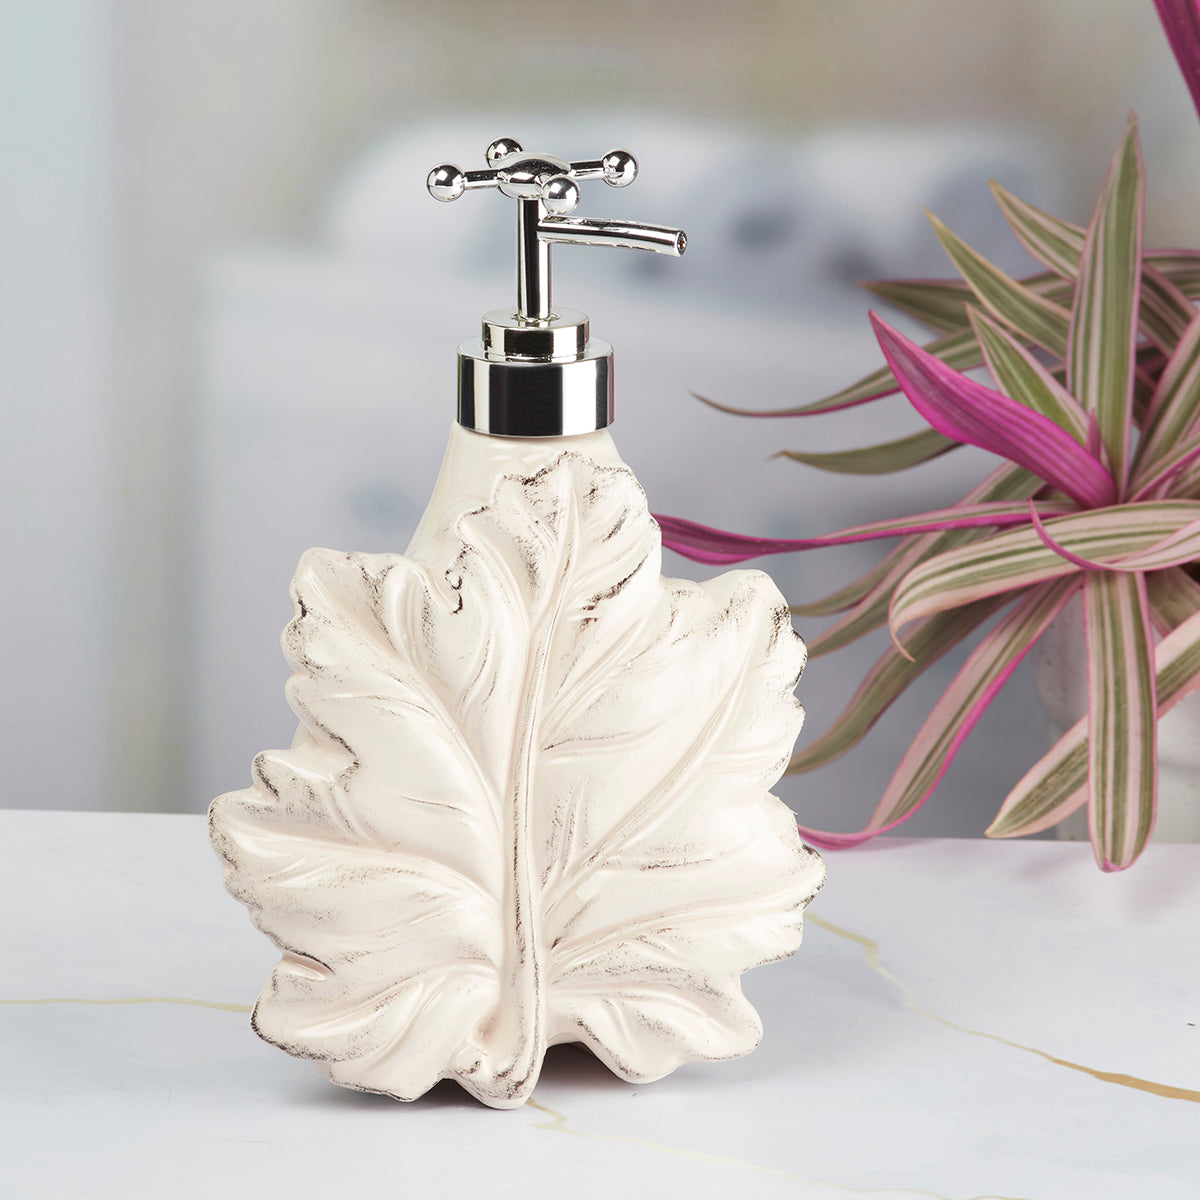 Ceramic Soap Dispenser Pump for Bathroom for Bath Gel, Lotion, Shampoo (8638)